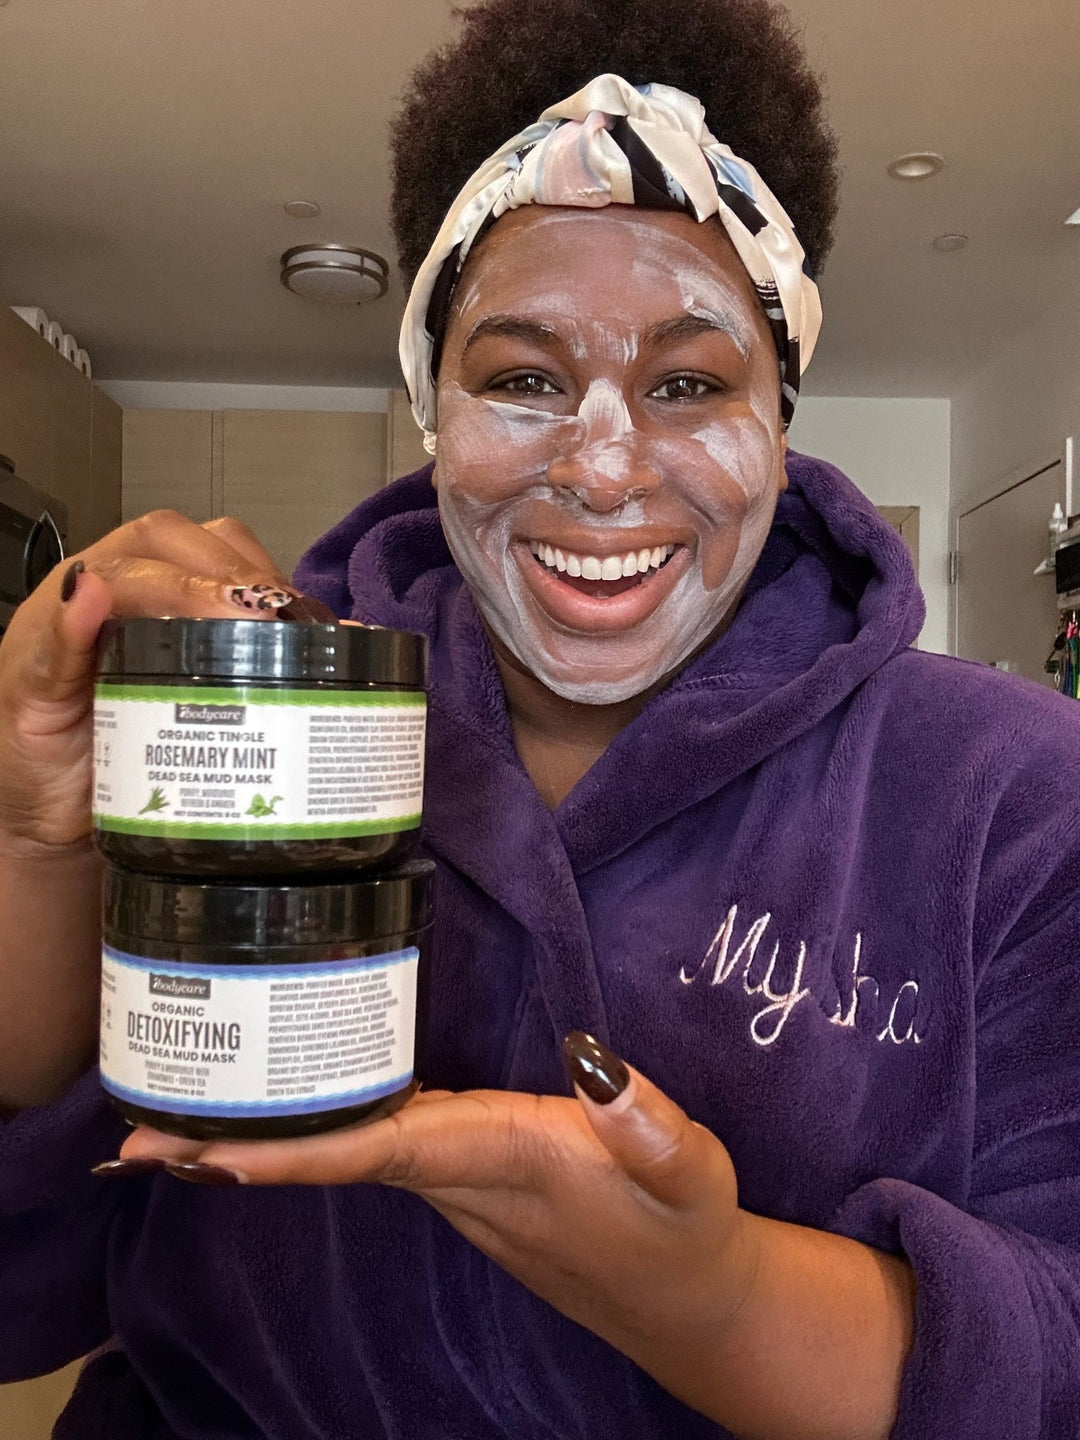 Dead Sea Mud Mask Set, with Kaolin Clay, Green Tea & Hydrating Oils - ibodycare - ibodycare - 1 Detox + 1 Rosemary Mint Mud Mask